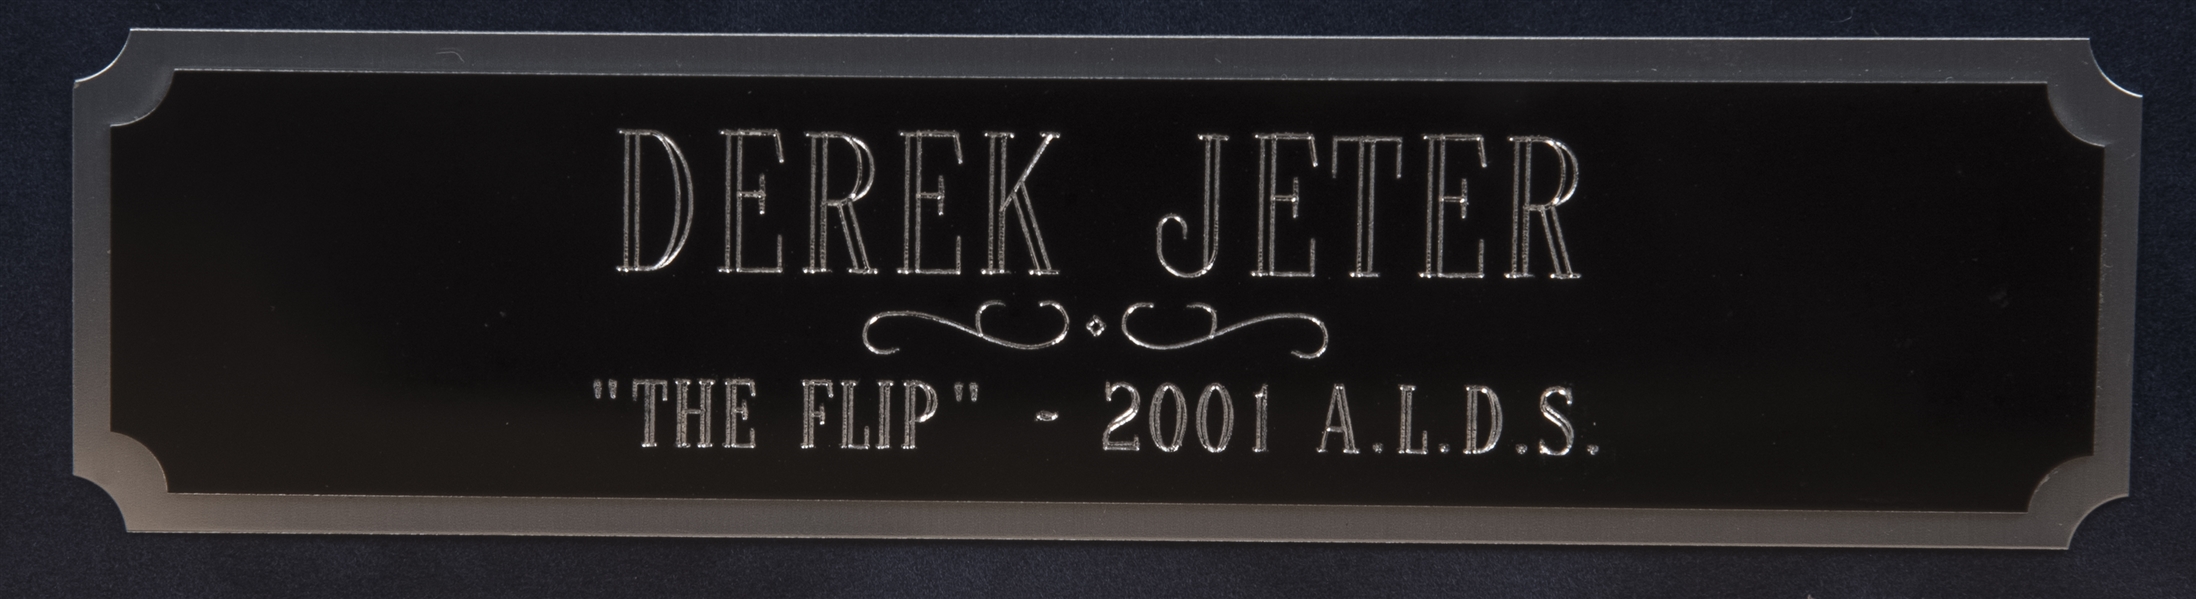 Derek Jeter Autograph 16x20 Framed Sepia Flip Photo New York Yanks Steiner